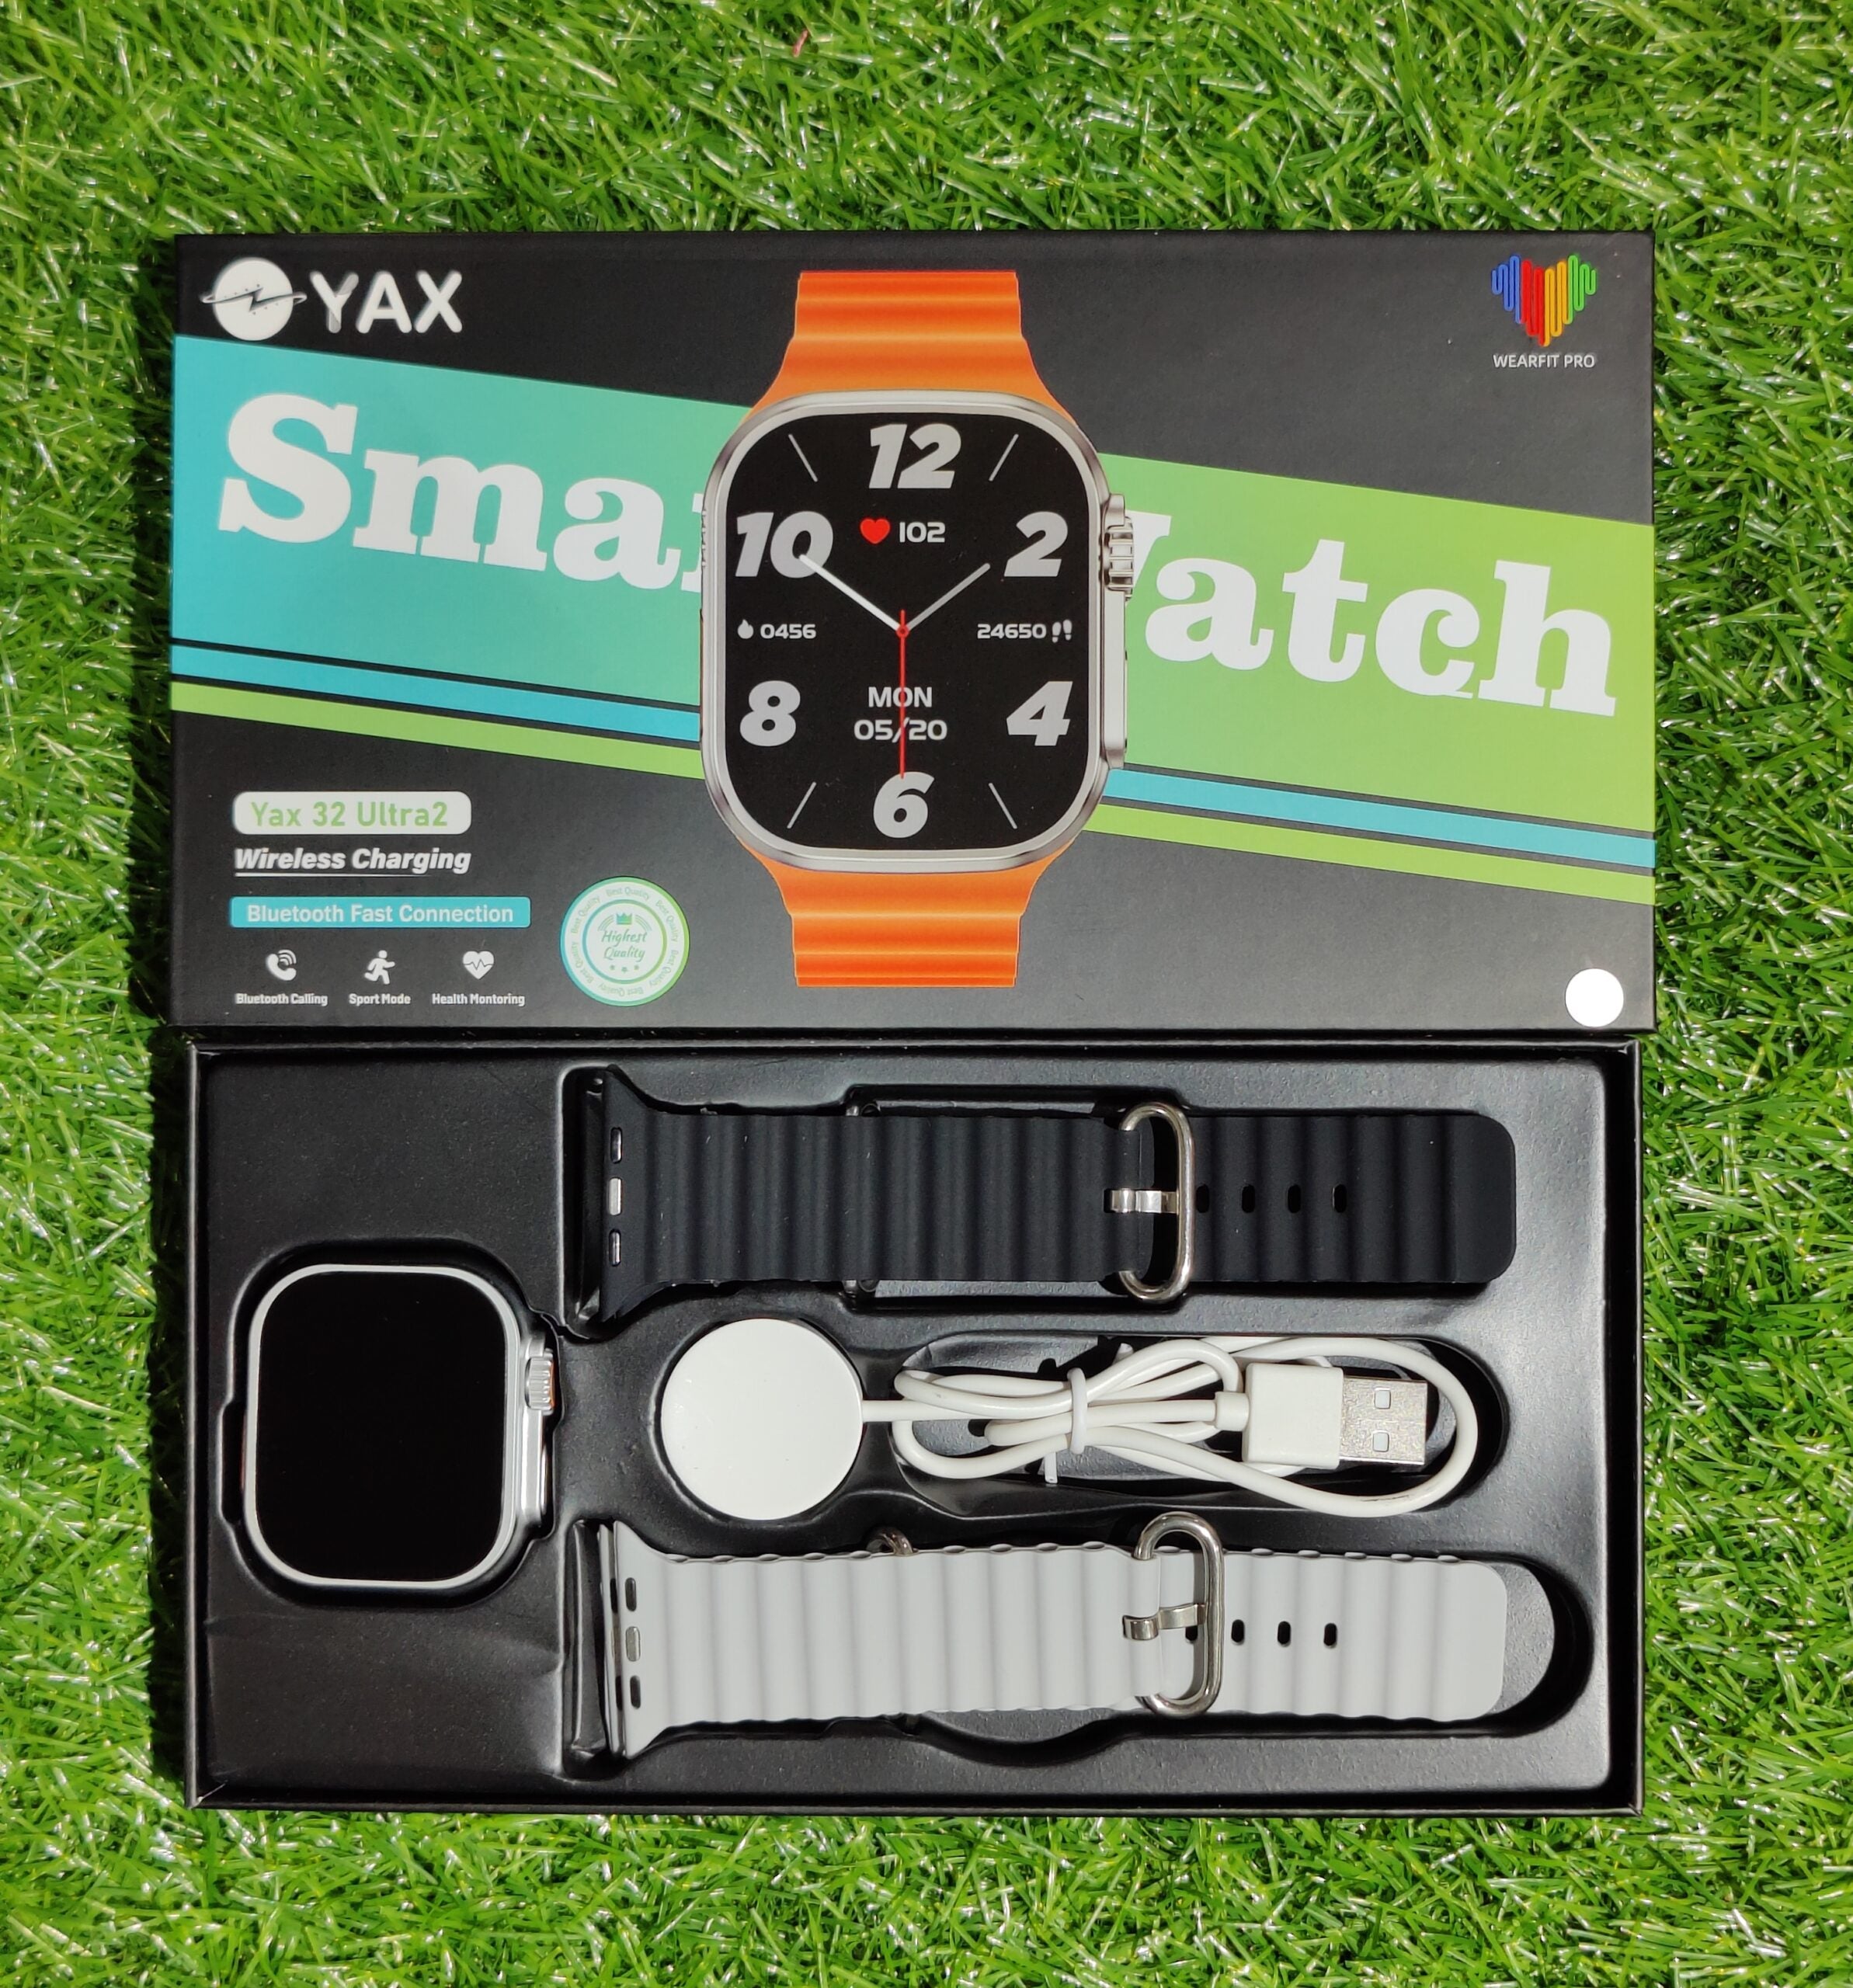 YAX 32 ultra 2 Smart Watch - 2 Straps - eShop Now